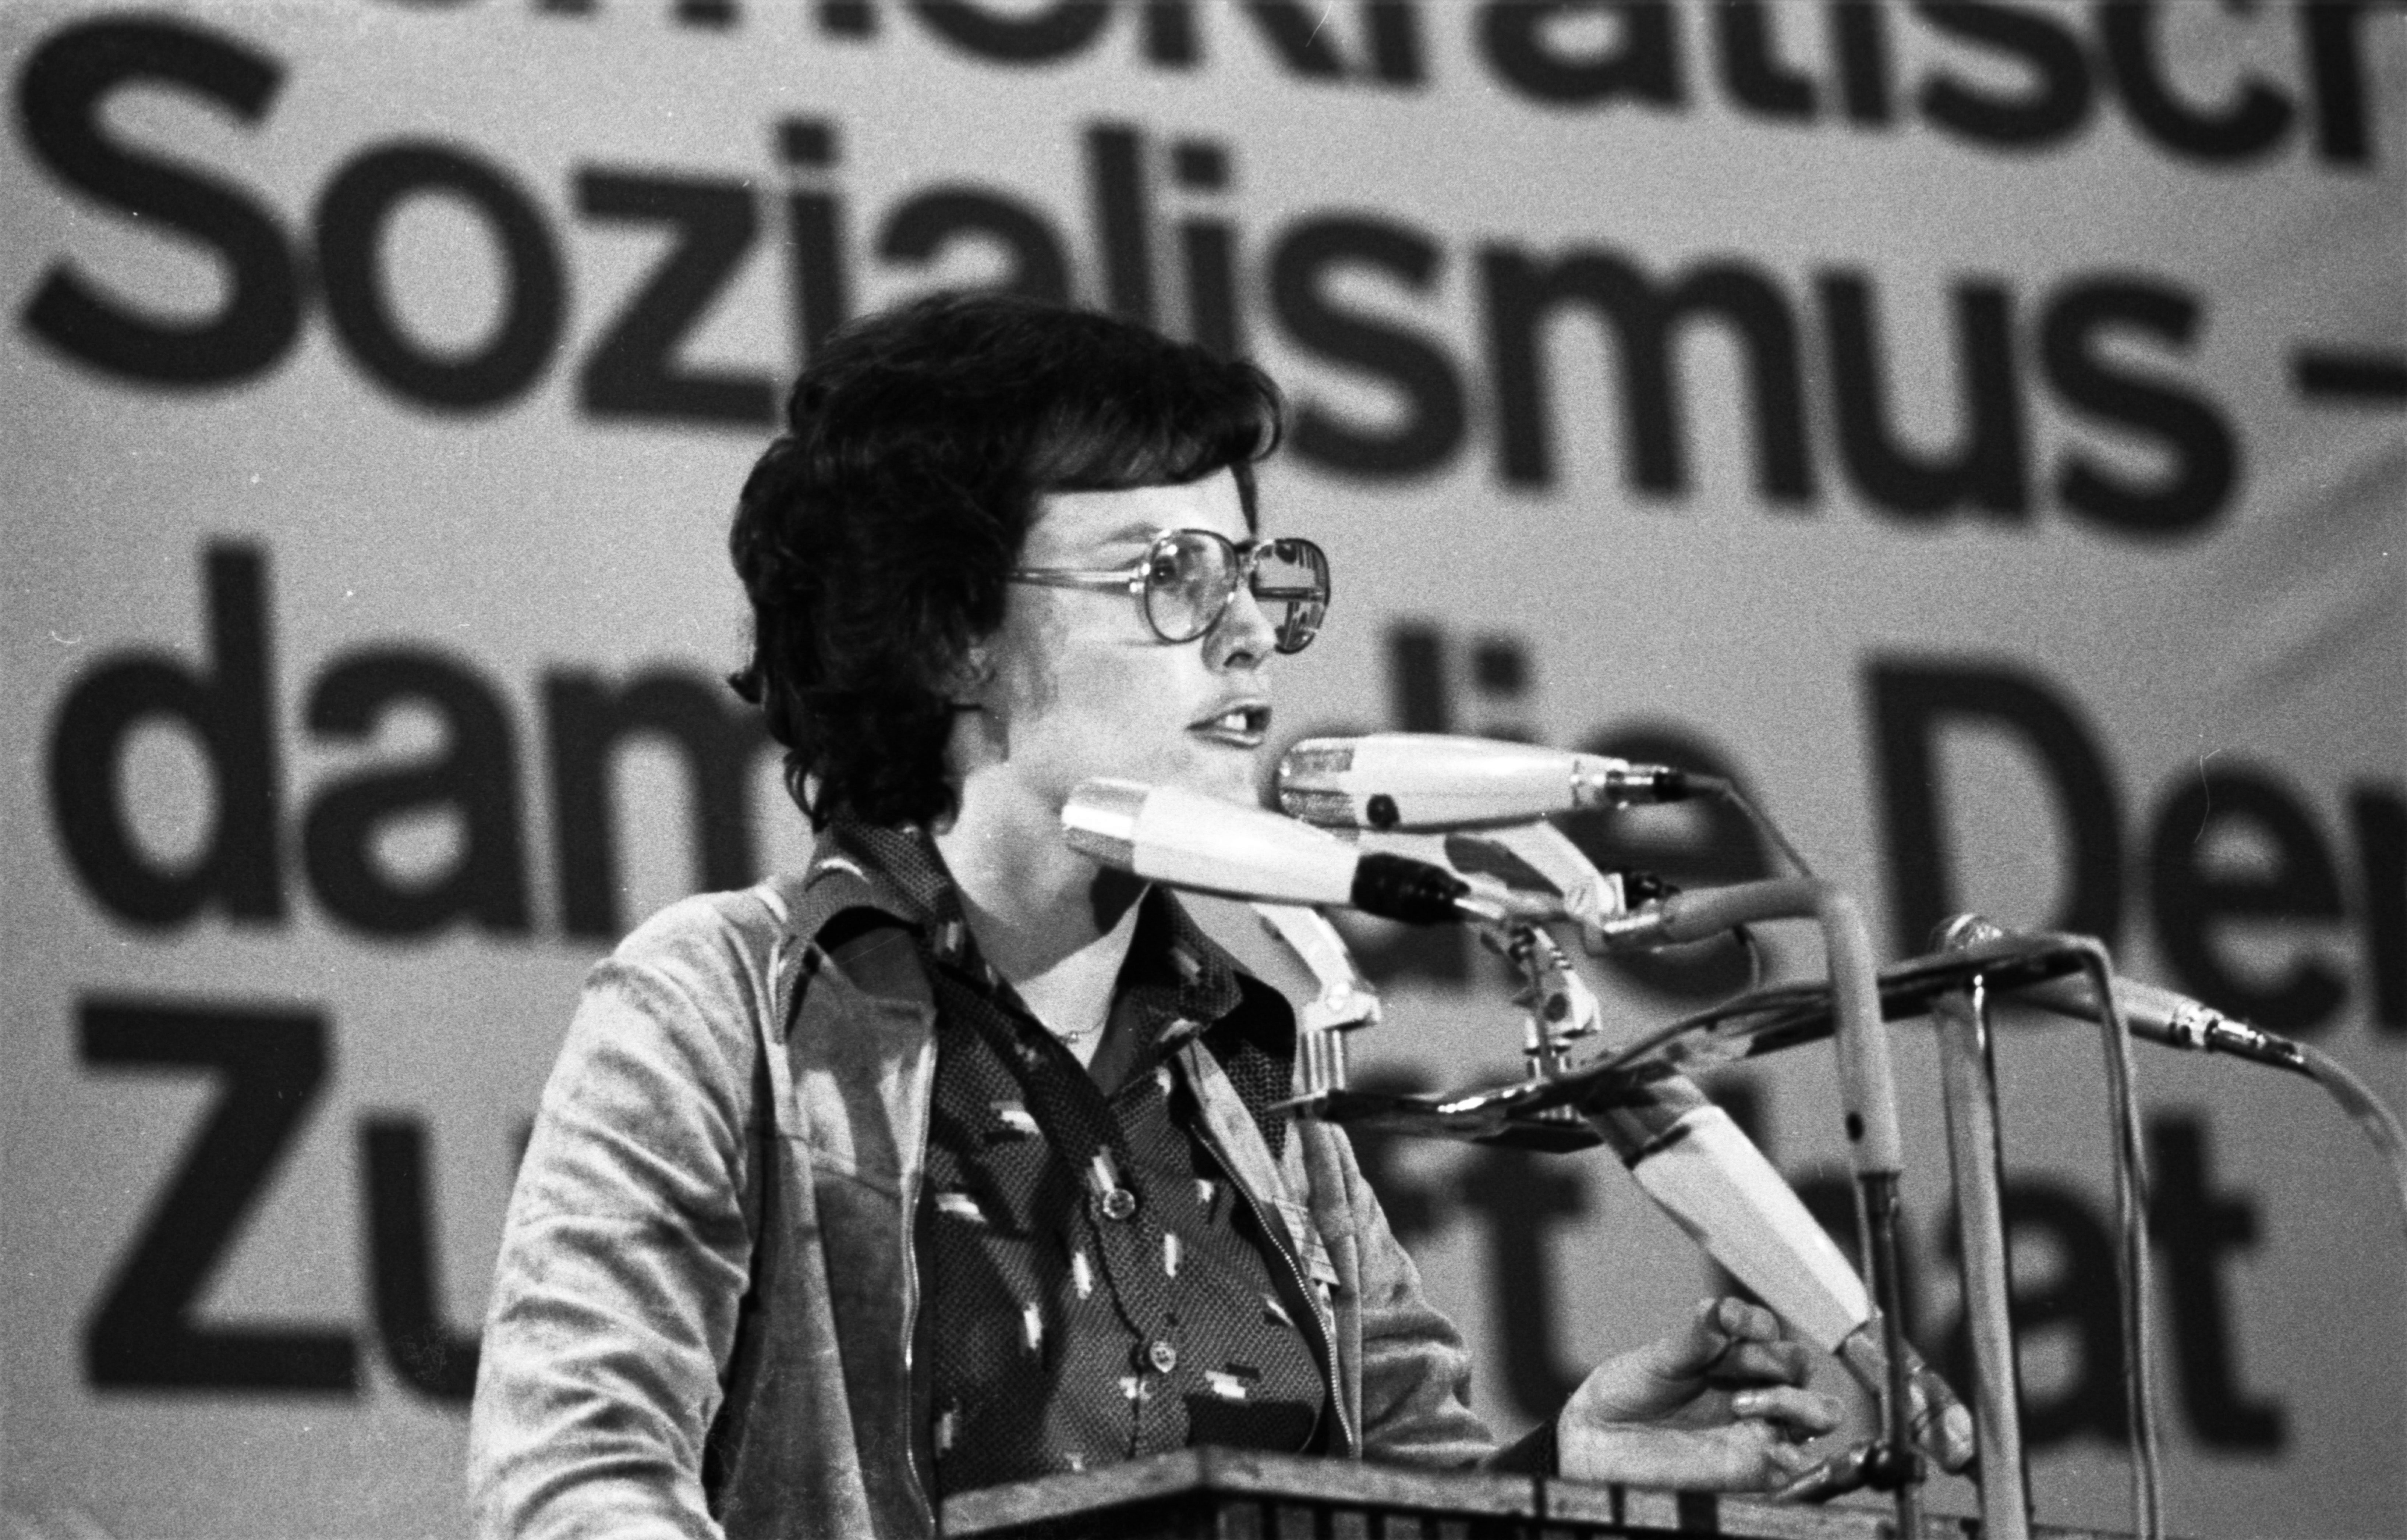 Heidemarie Wieczorek-Zeul am Rednerpult auf dem Juso-Bundeskongress 1976